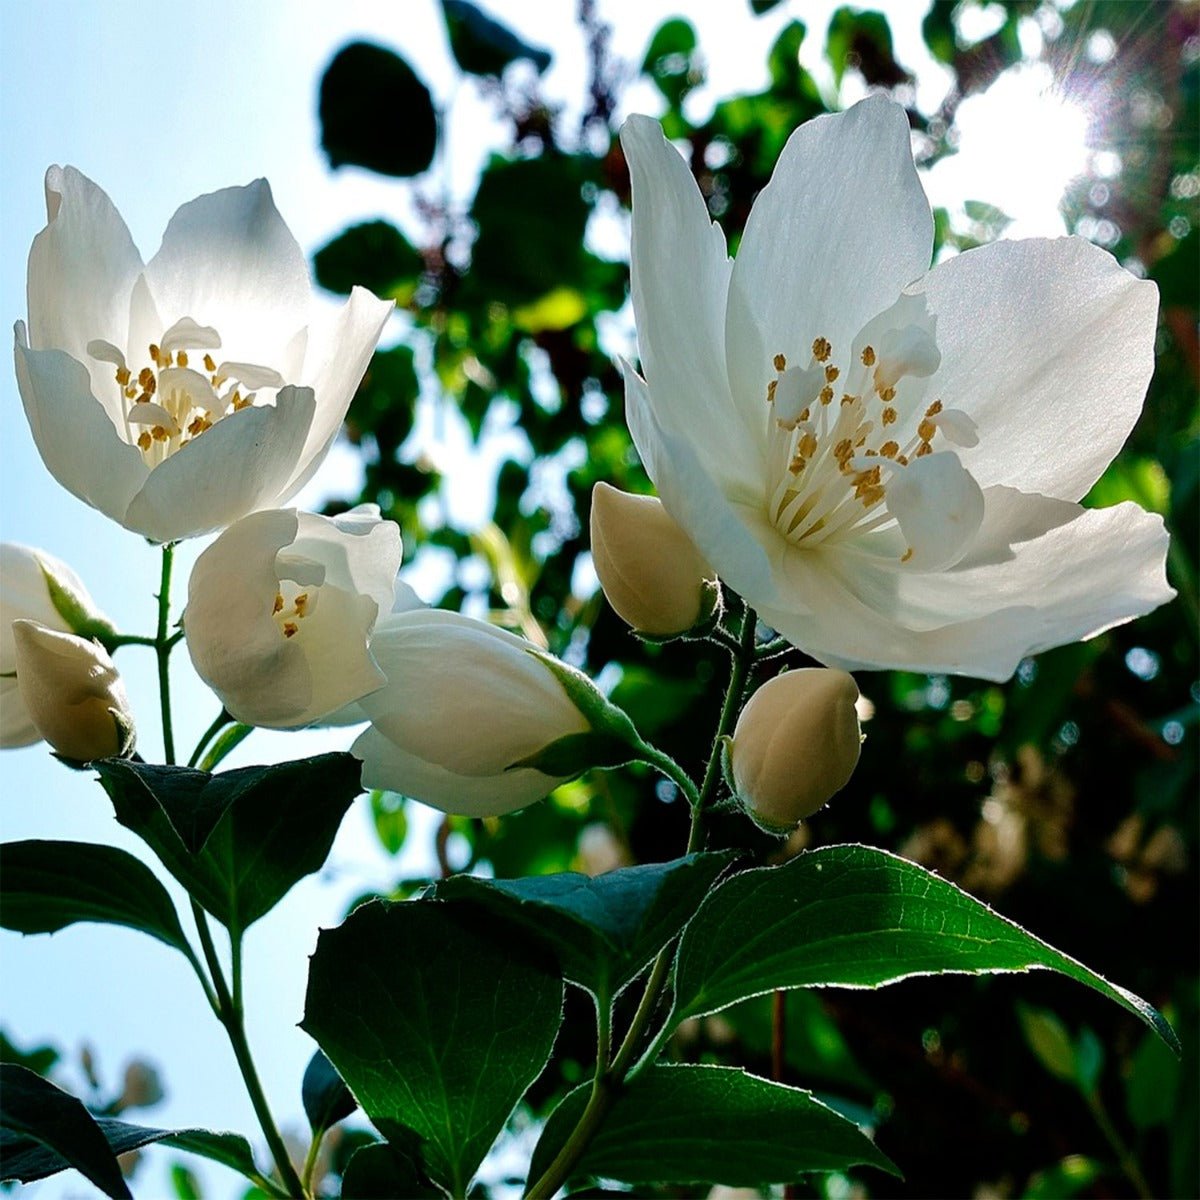 100+] Jasmine Flower Pictures